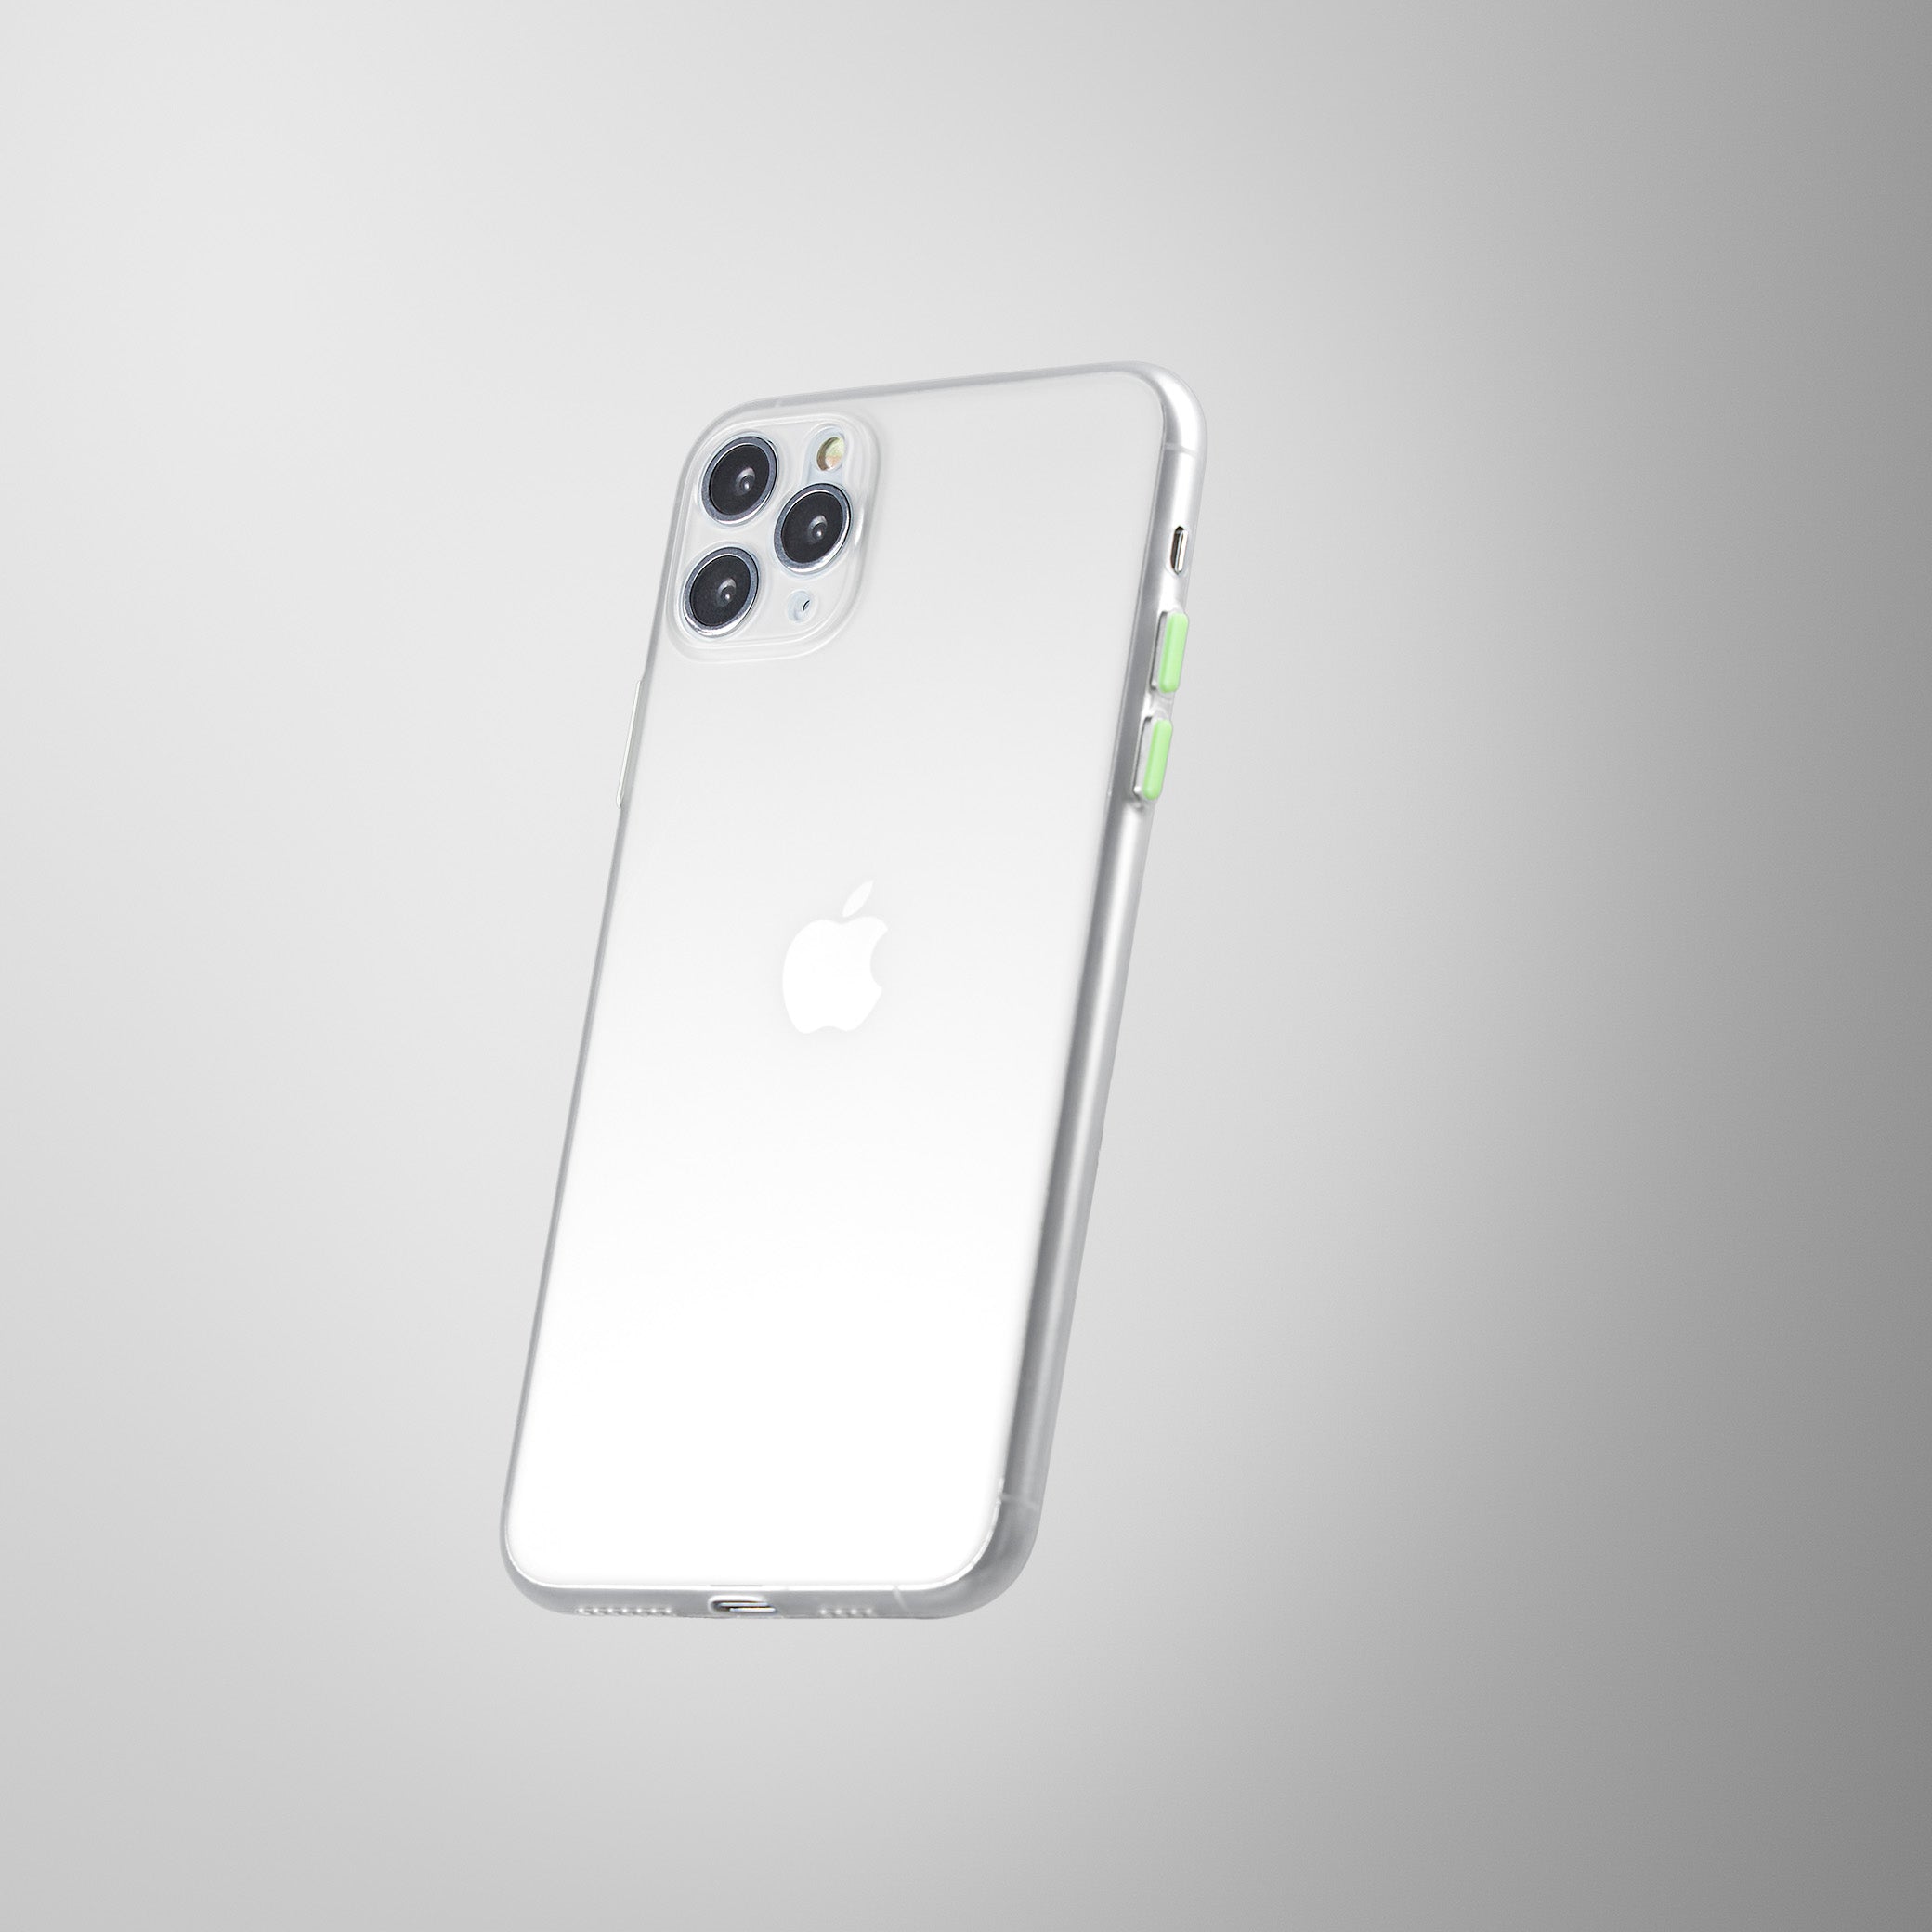 Super Slim Case 2.0 for iPhone 11 Pro Max - Glazed Frost White